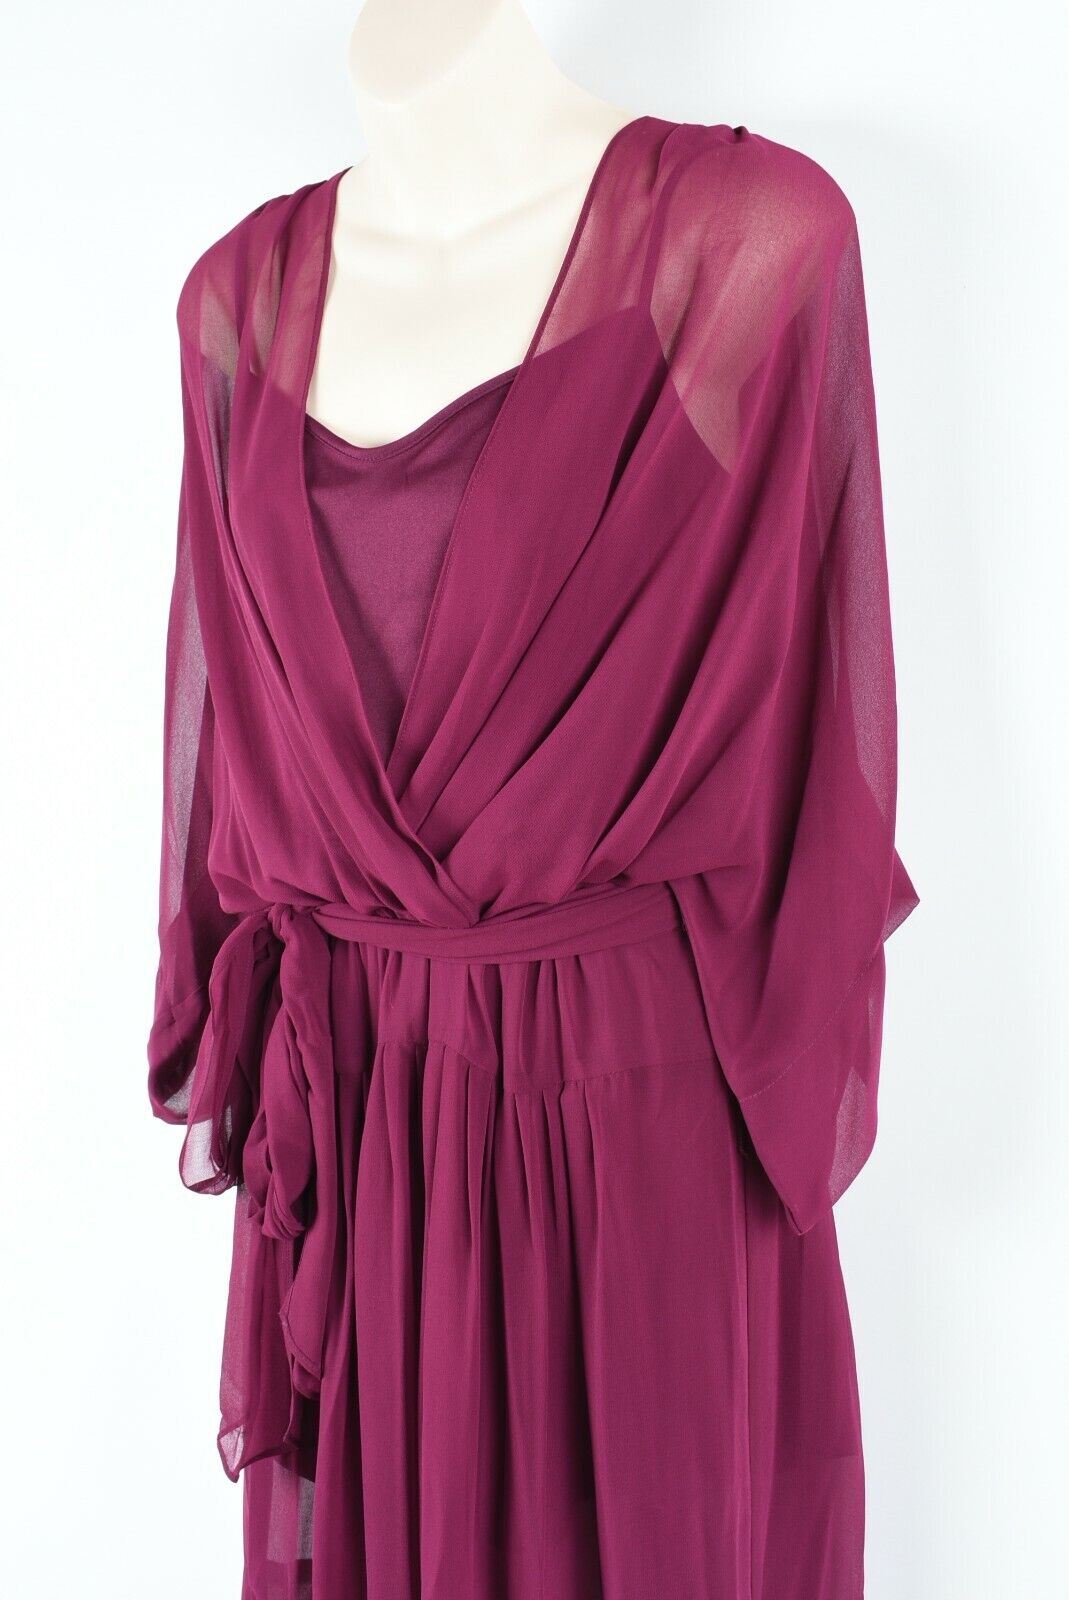 LAUREN RALPH LAUREN Women's AVALA Chiffon Dress, Ruby Red, size UK 12